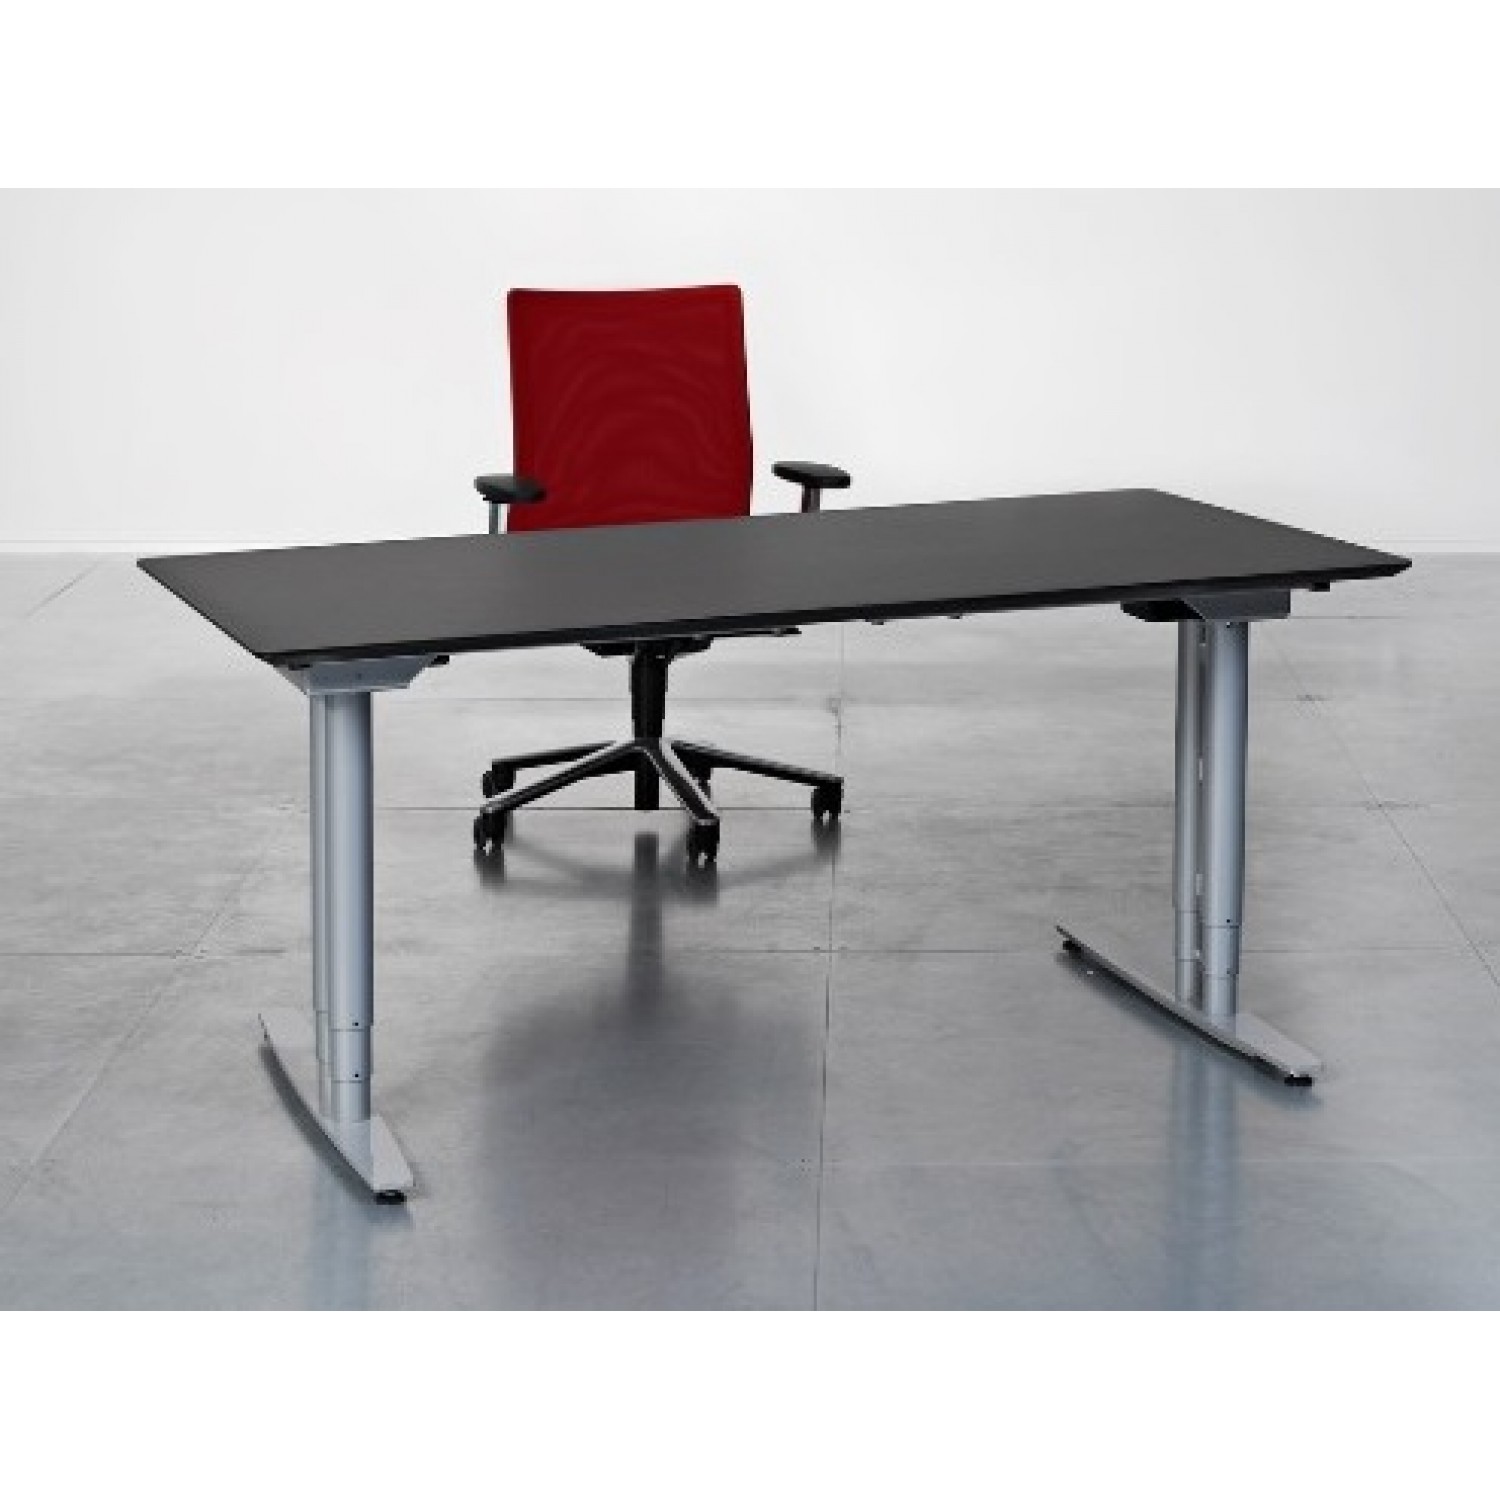 beautiful electrically height-adjustable desk 25 img 1736 1024x1024 jpg v ENABKMS